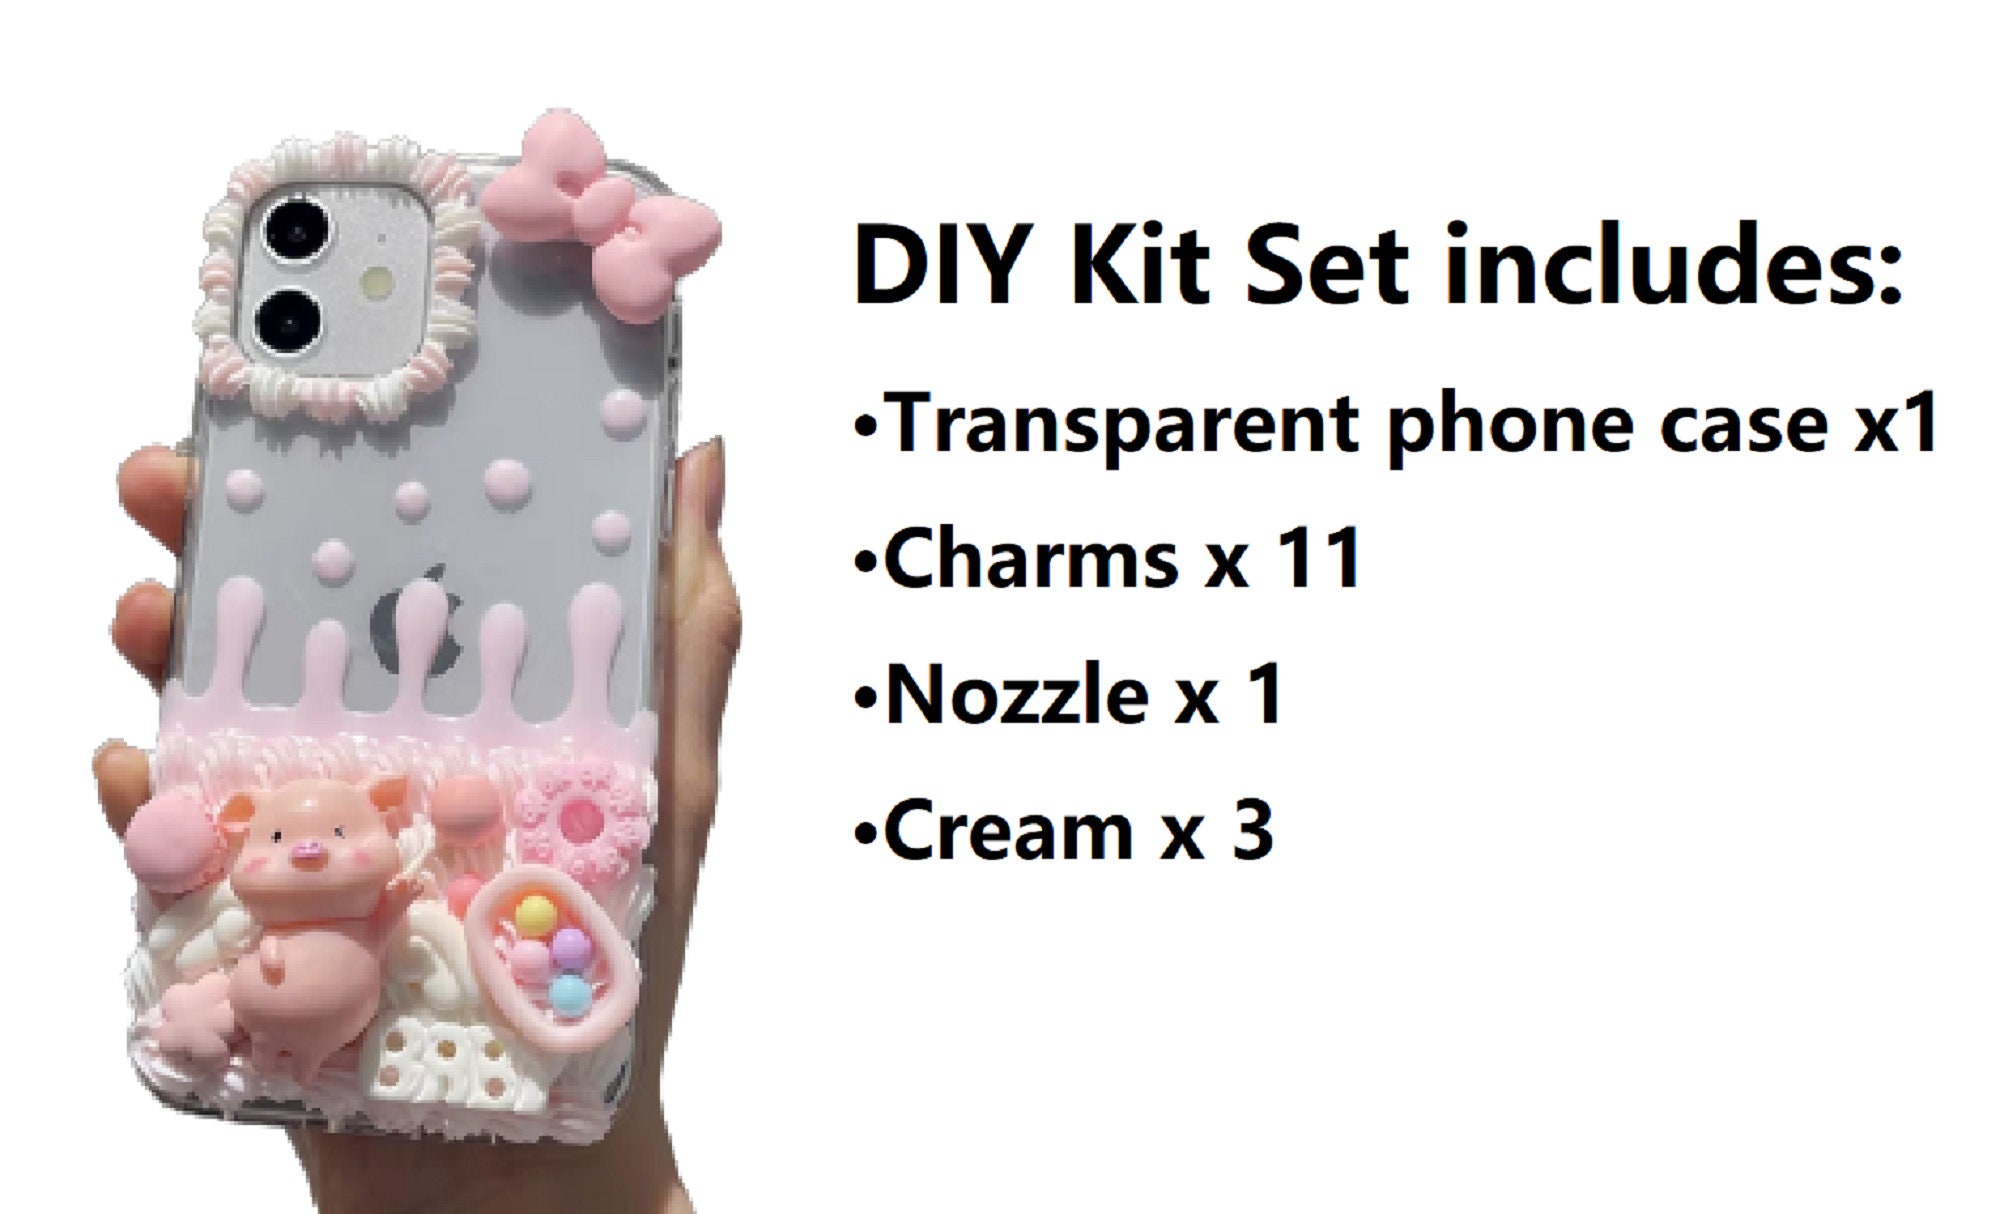 Sanrio Juice Box Inspired DIY Kit – Decoden Crafts